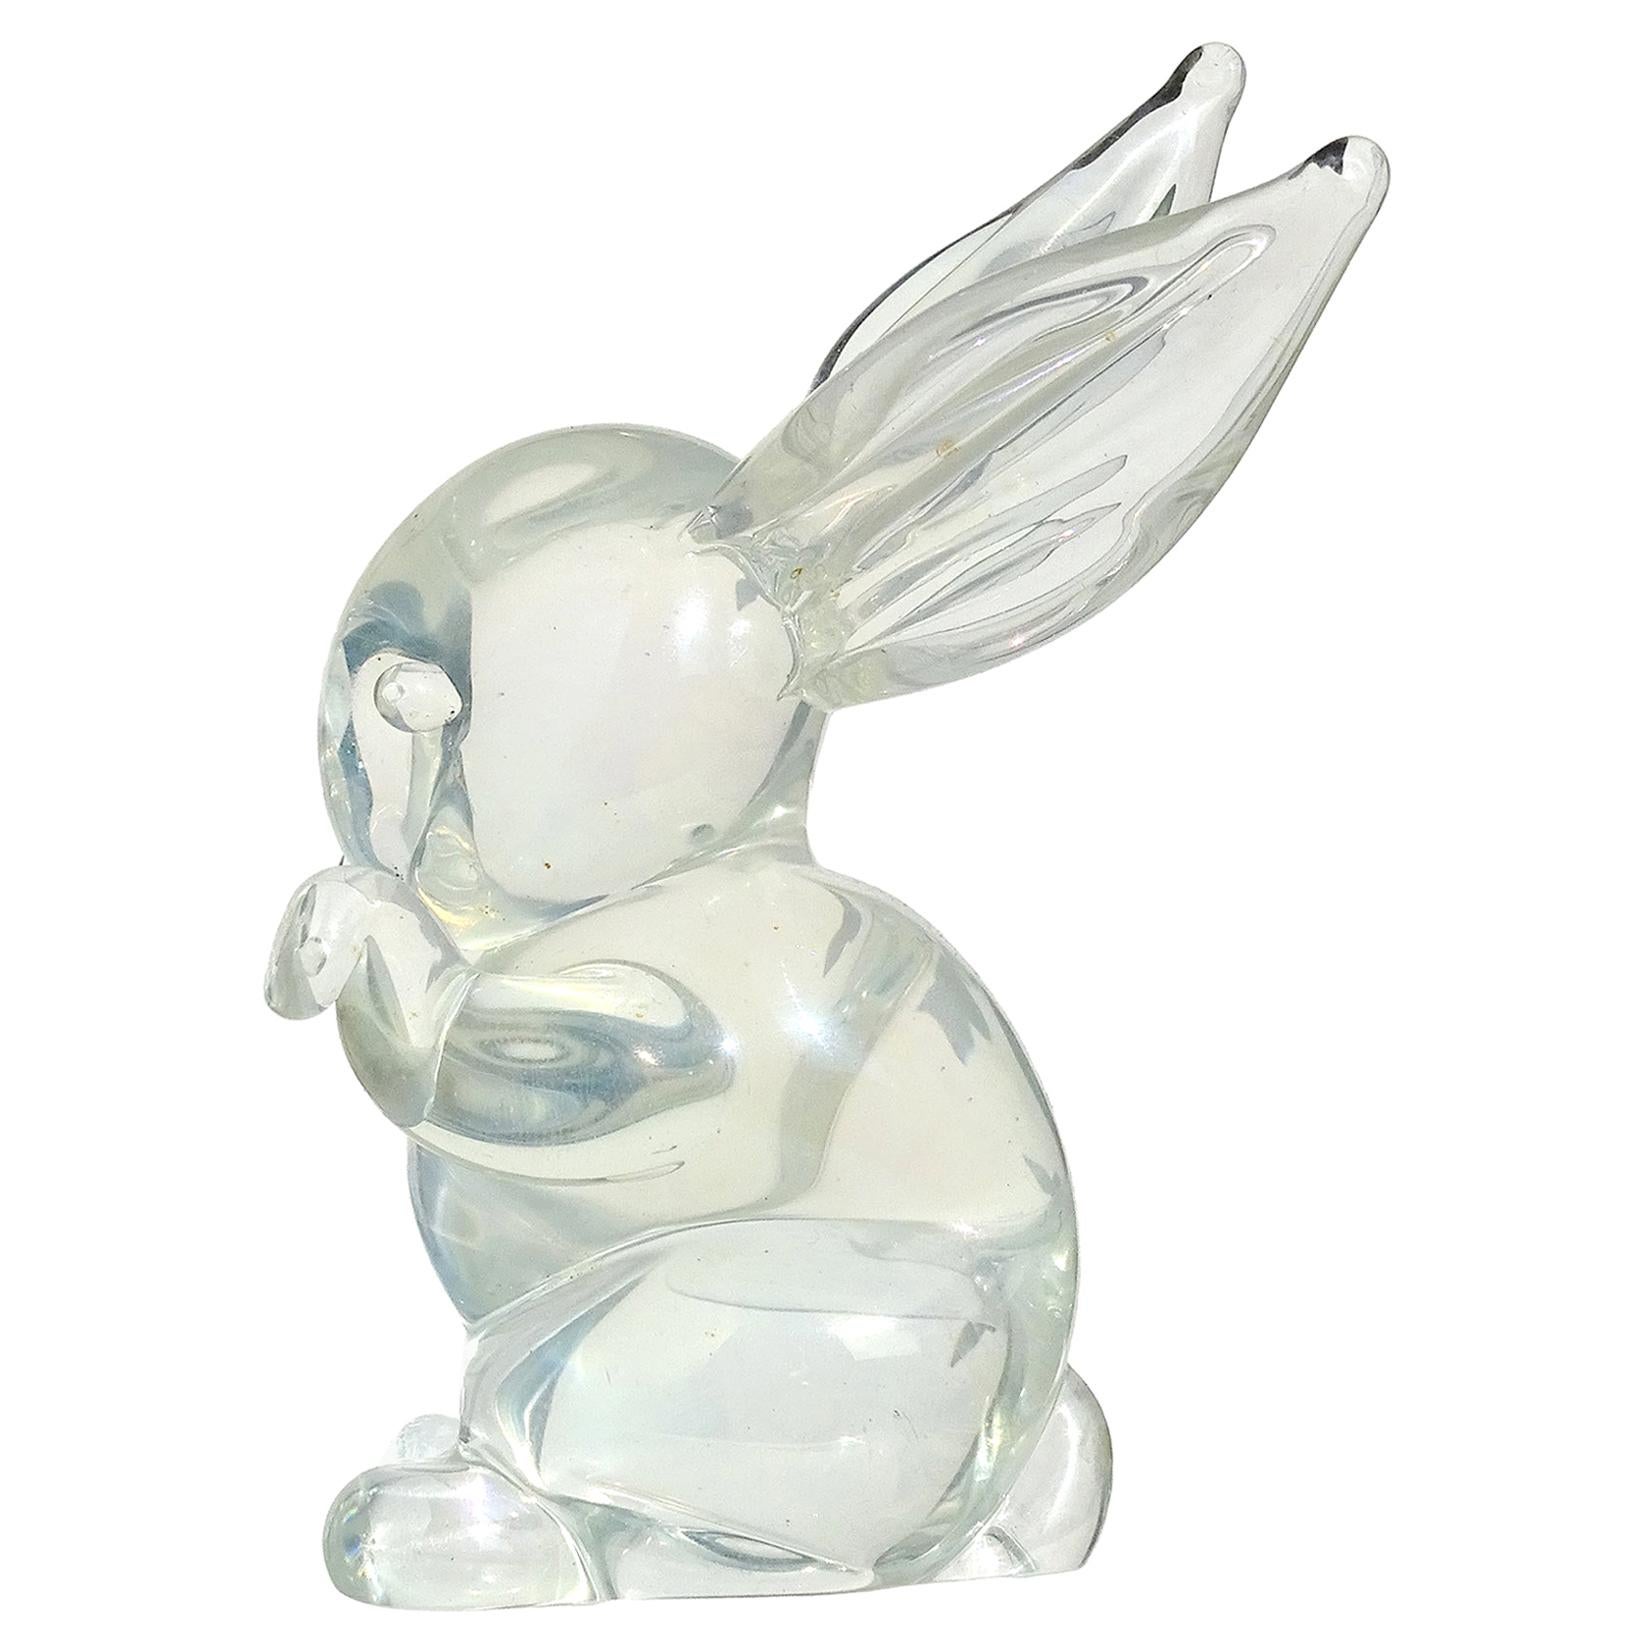 Details about   Art Blown Glass Murano Figurine Glass figurine rabbit 